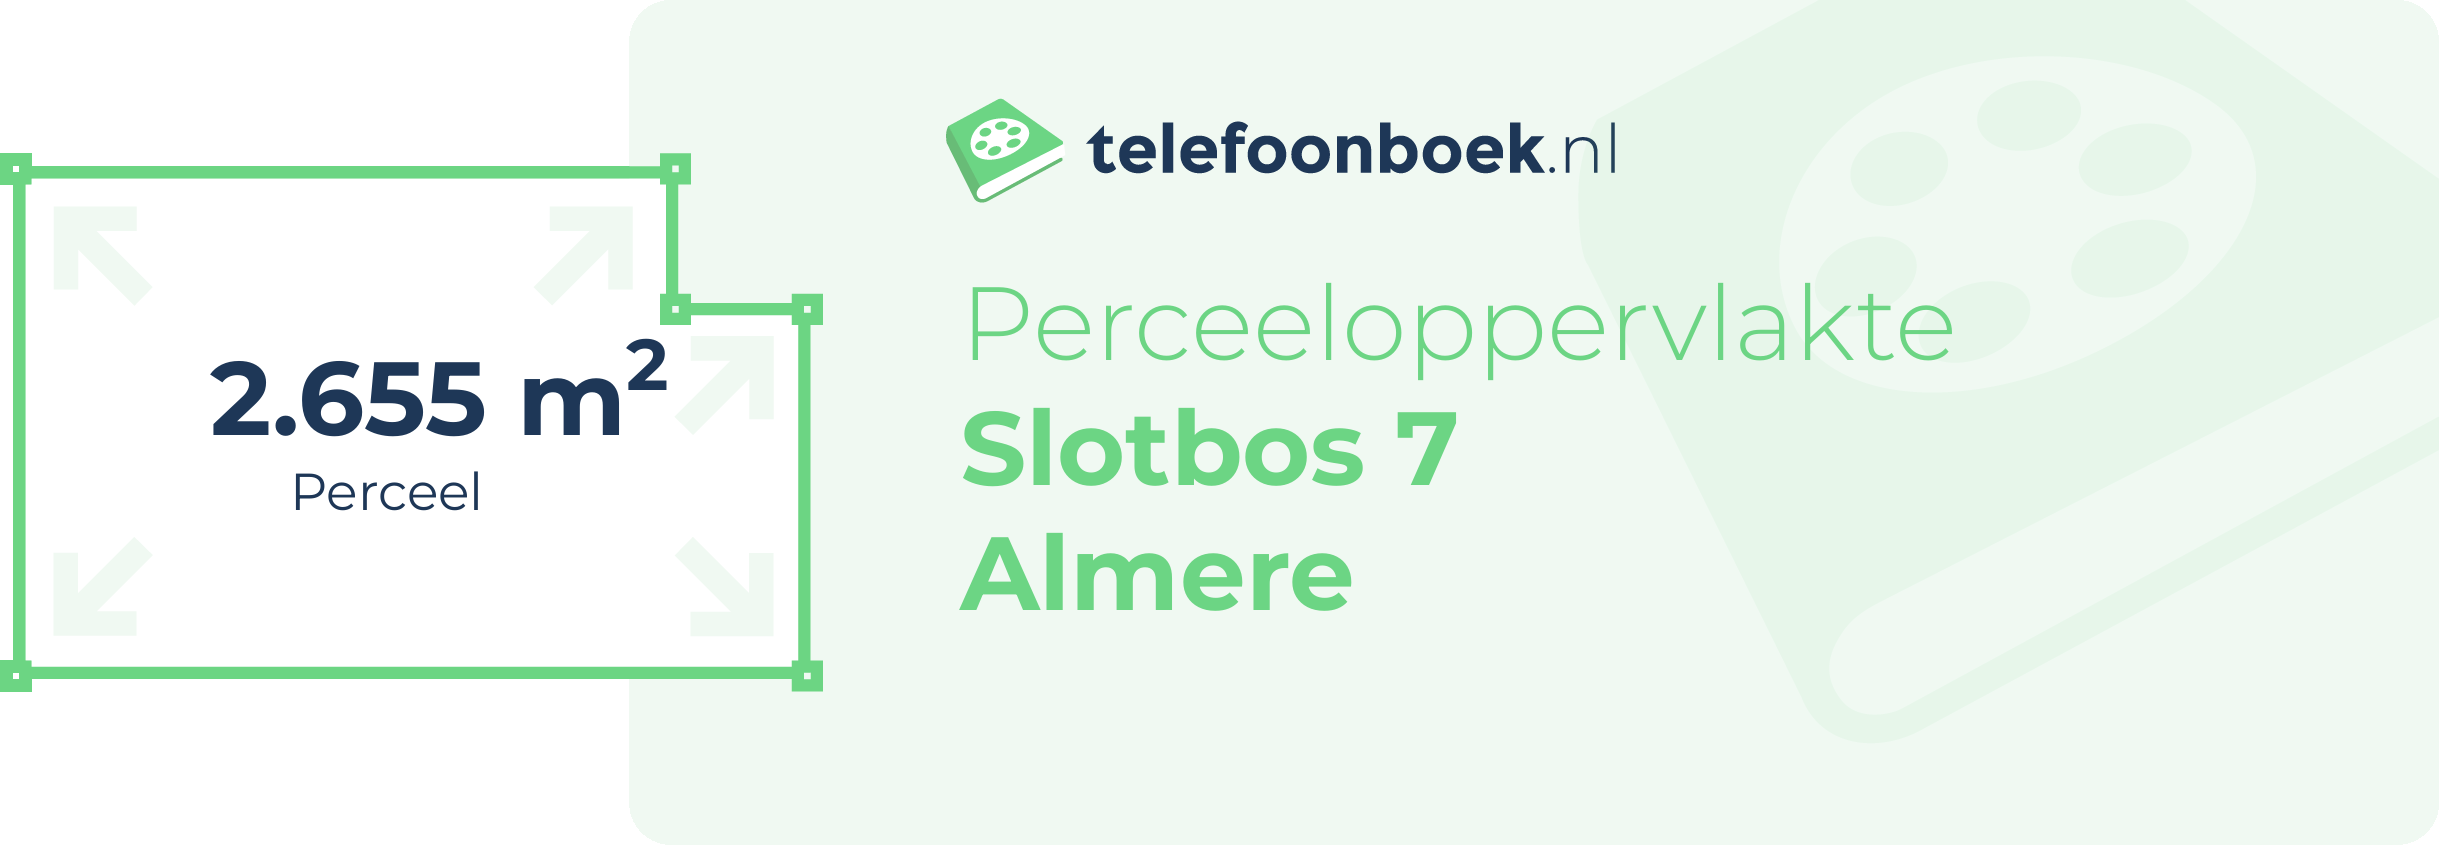 Perceeloppervlakte Slotbos 7 Almere